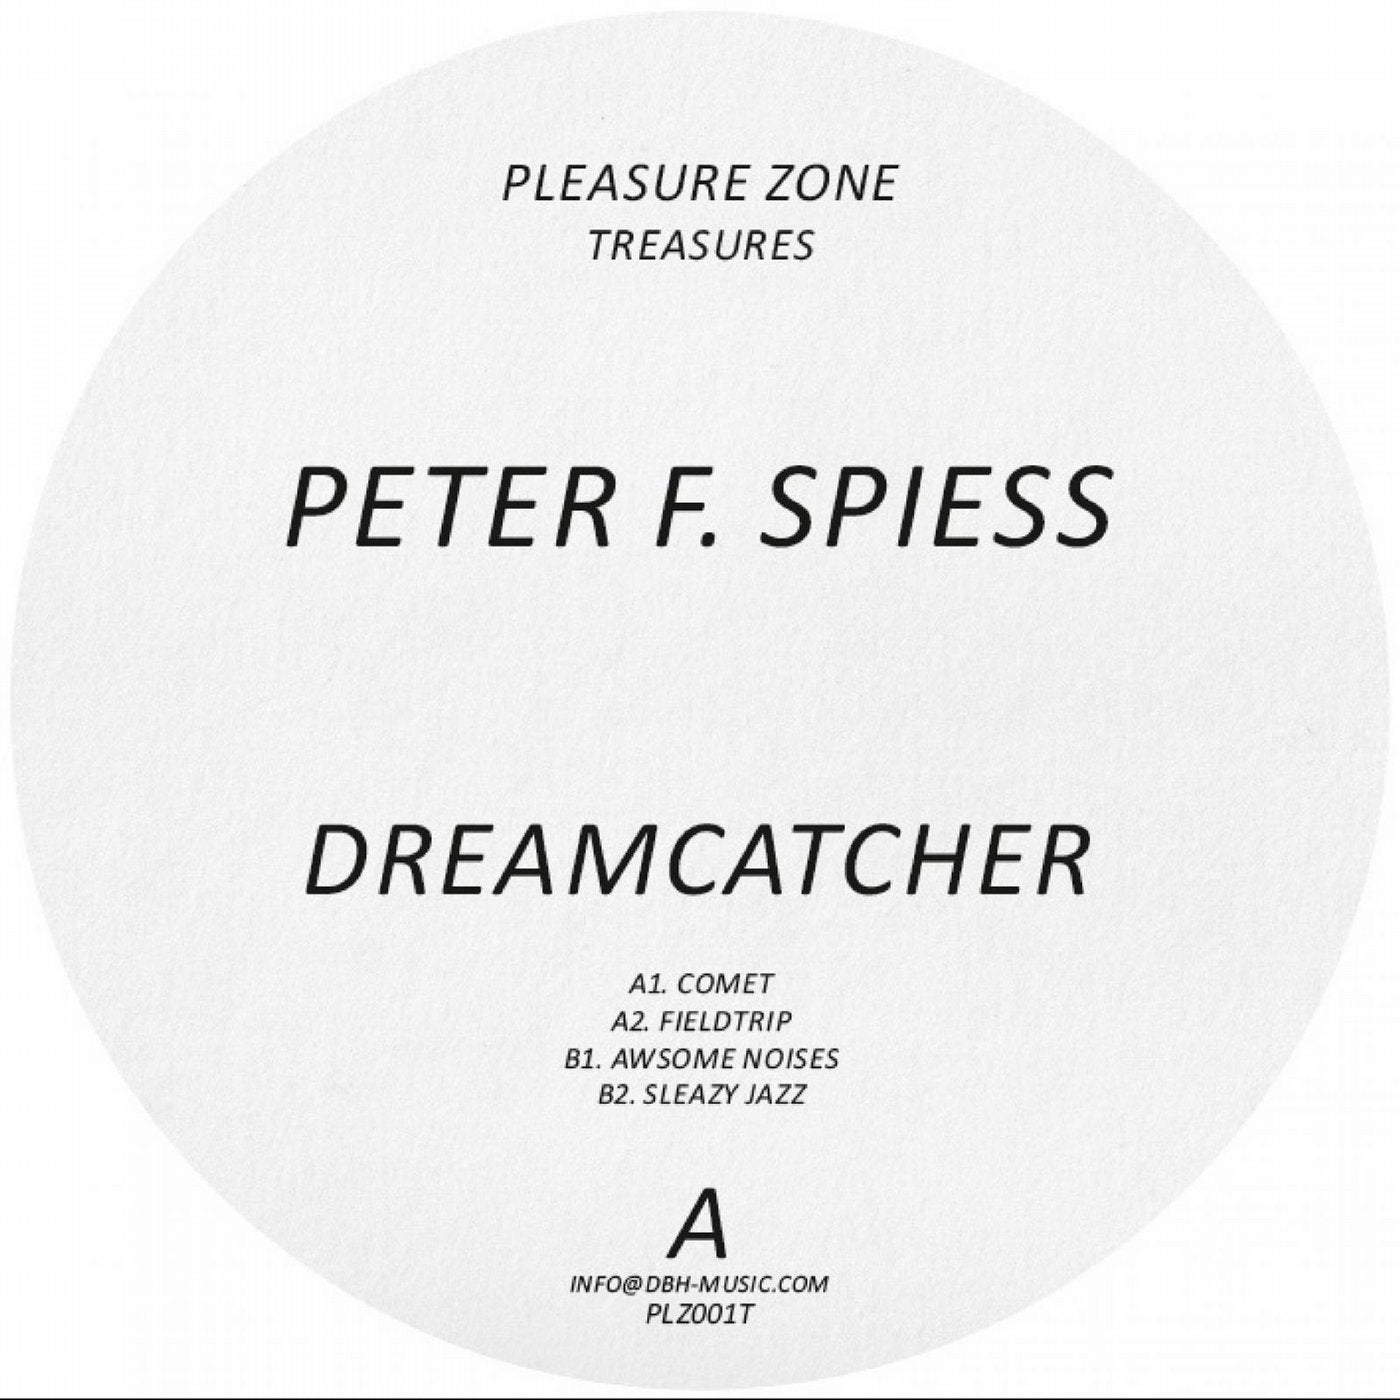 Dreamcatcher EP